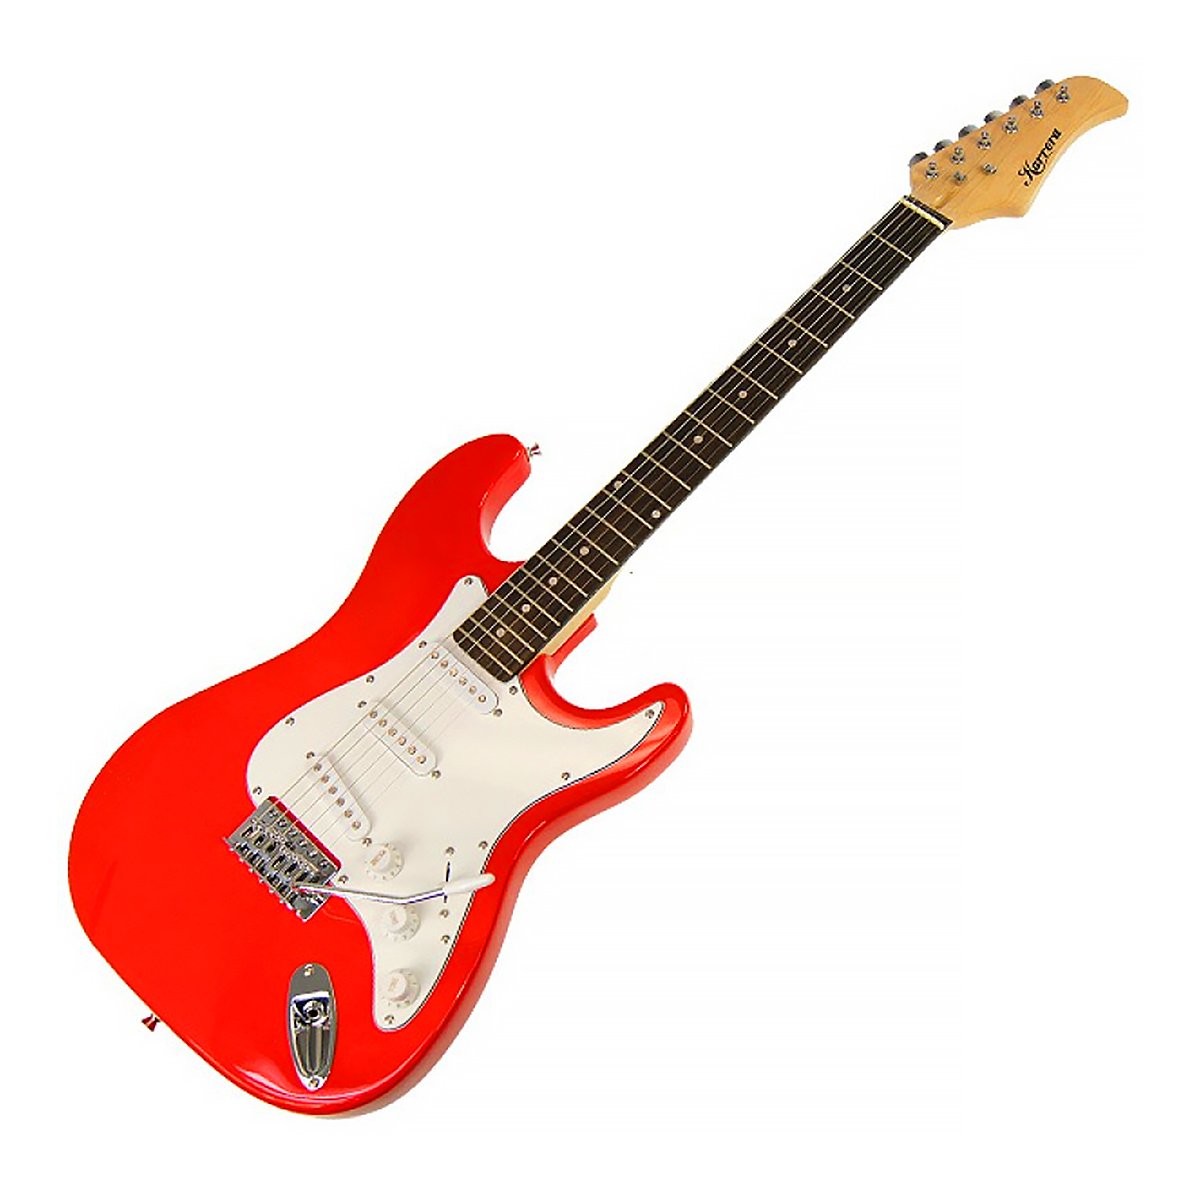 Karrera 39in Electric Guitar - Red - SILBERSHELL